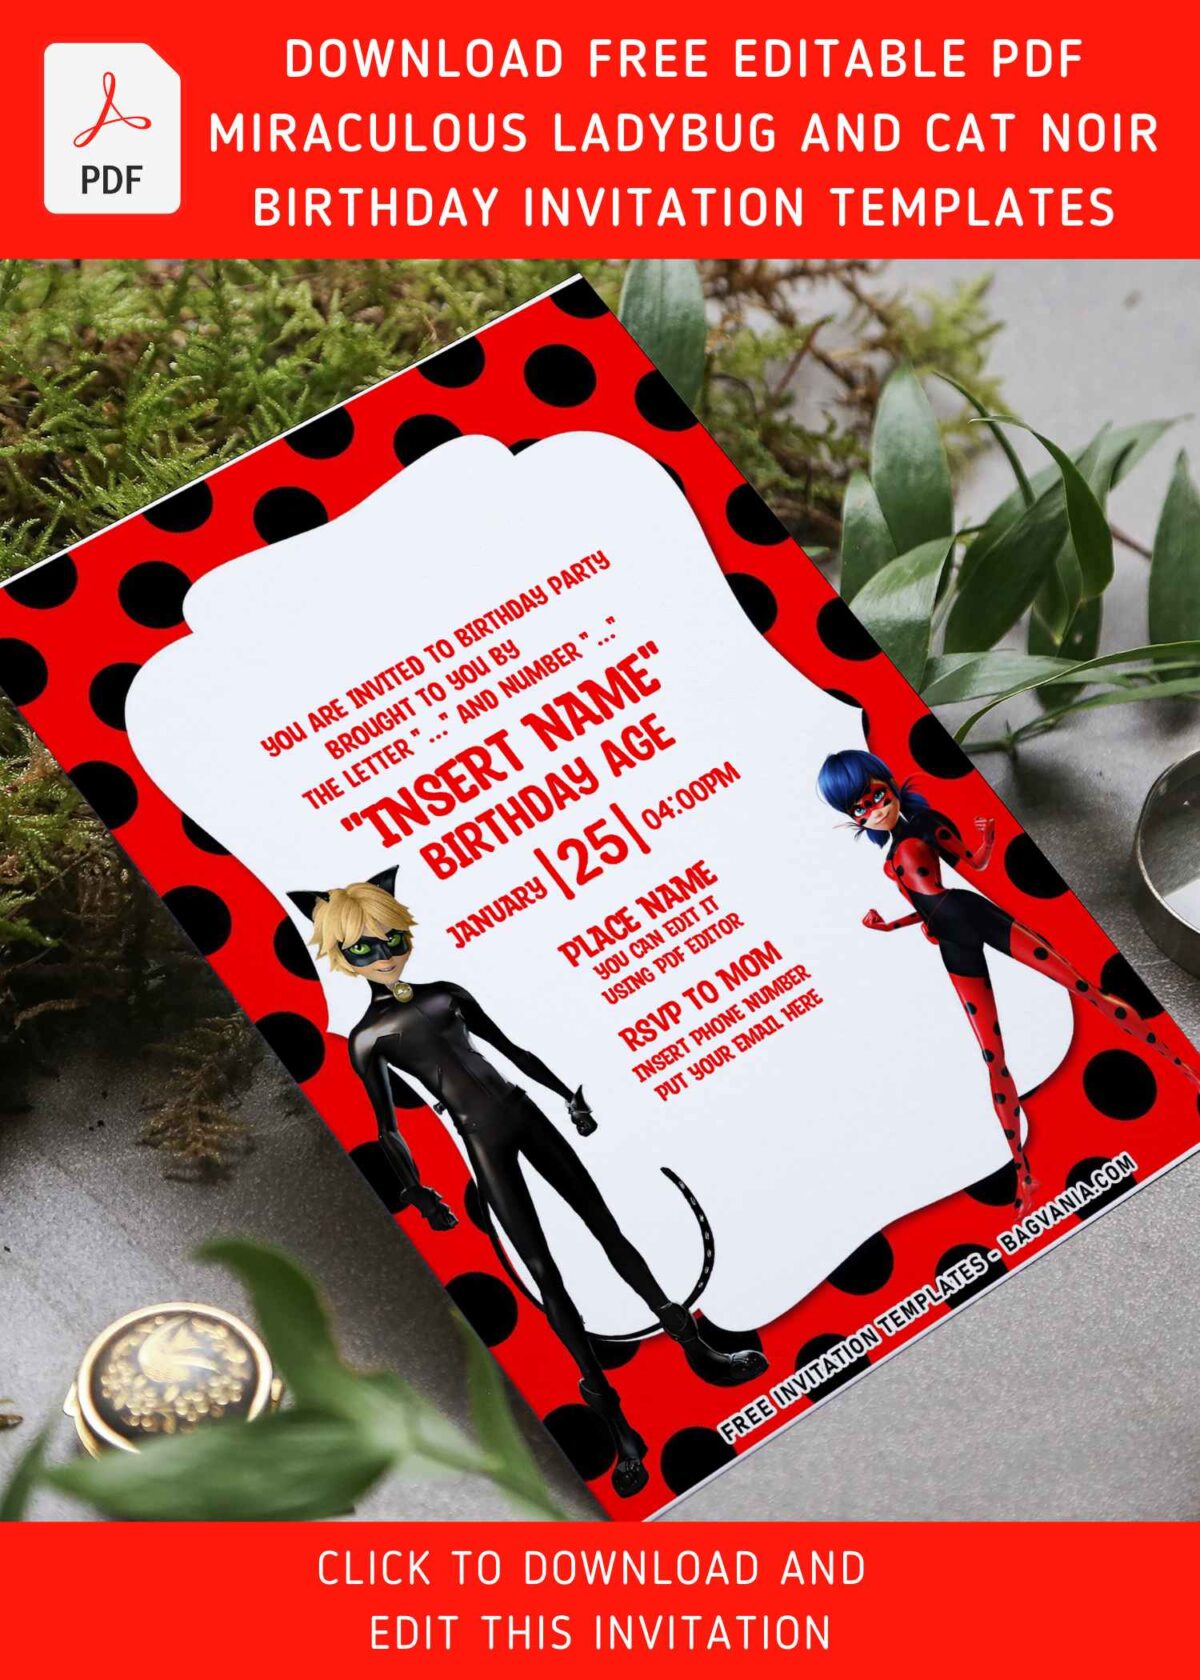 (Free Editable PDF) Super-Hero Ladybug And Cat Noir Birthday Invitation Templates with adorable Cat Noir